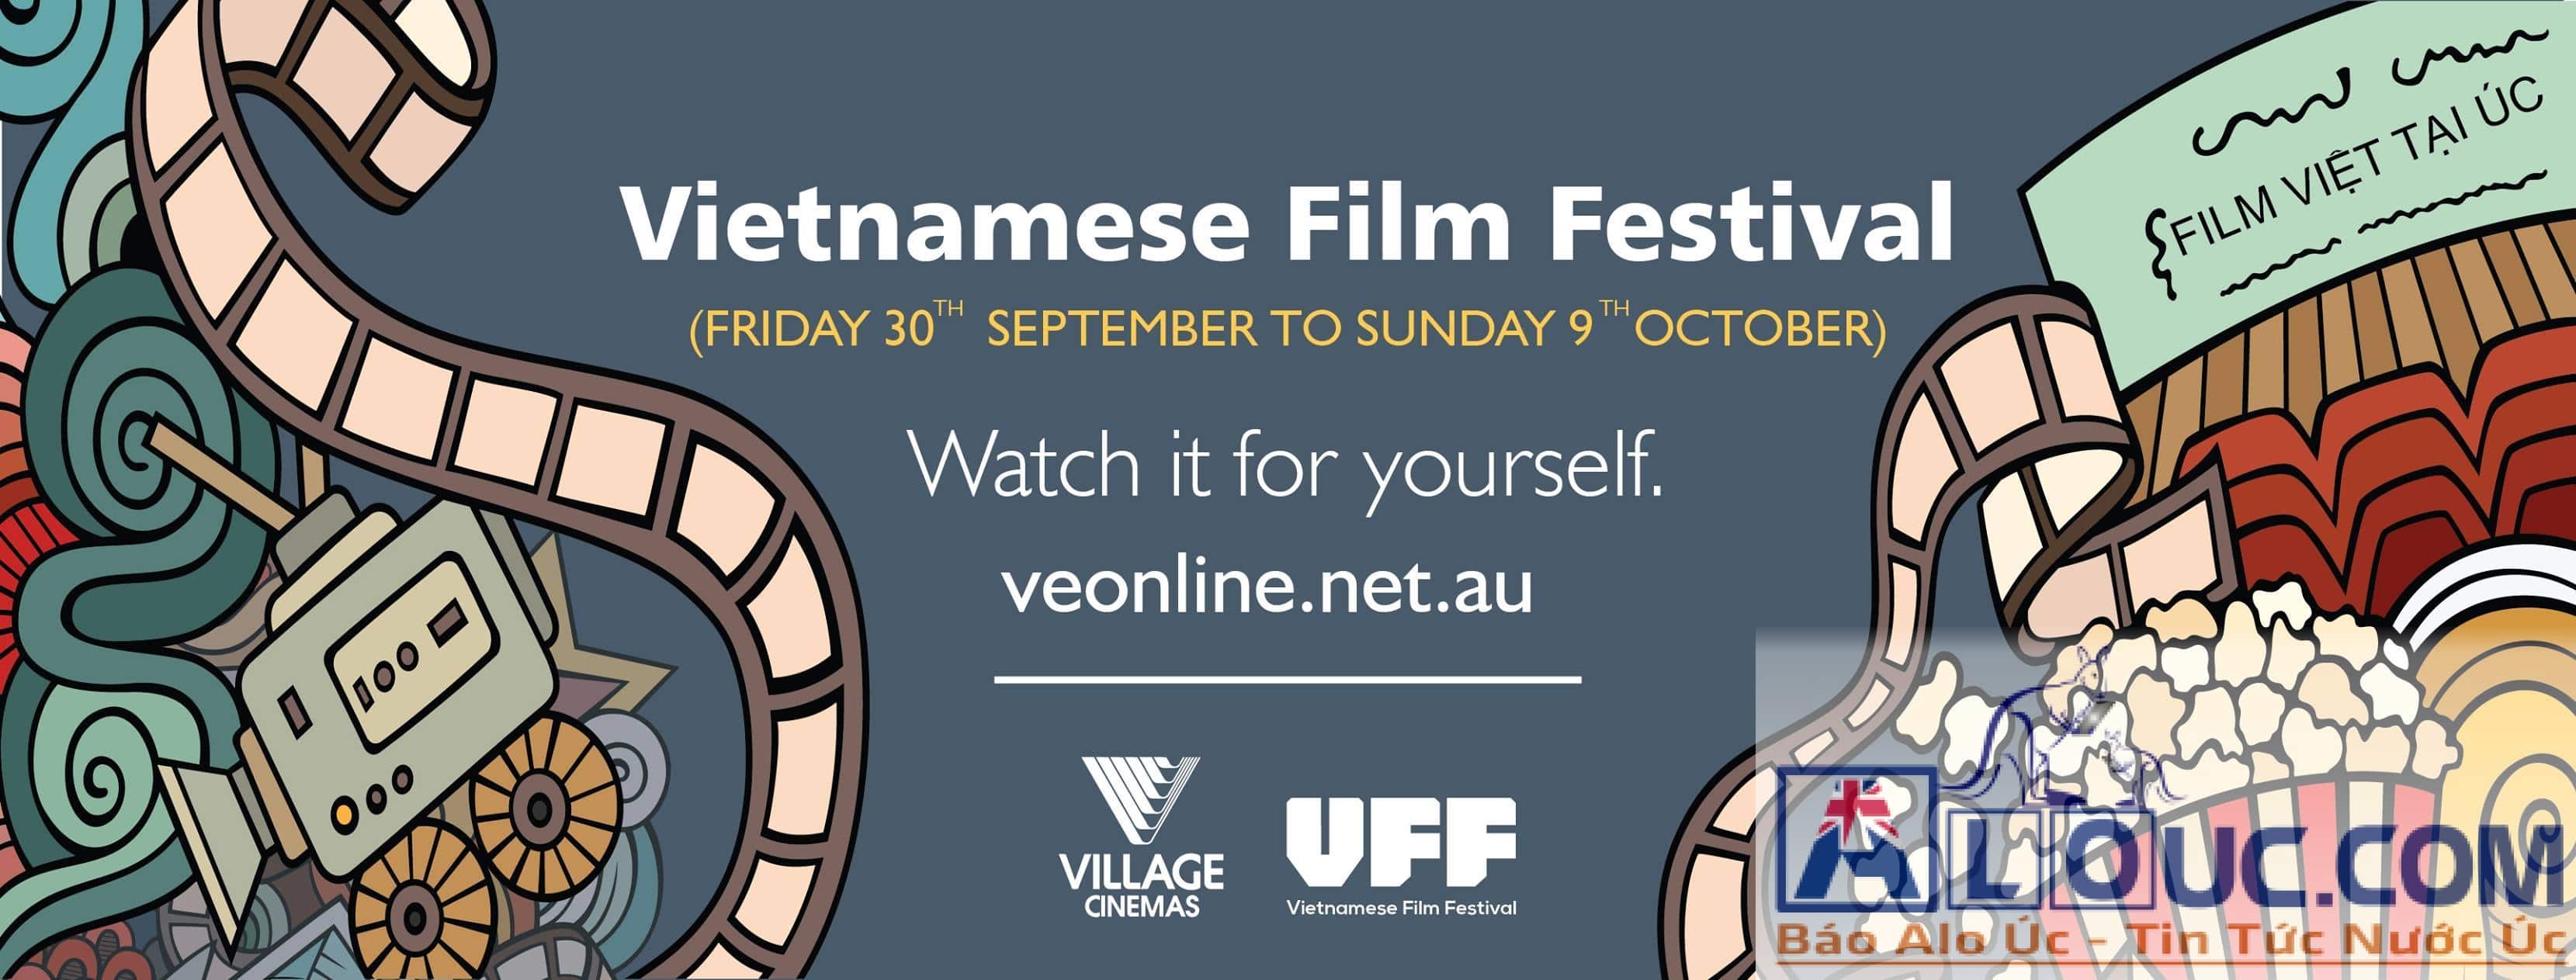 VIETNAMESE FILM FESTIVAL IN AUSTRALIA 2016 